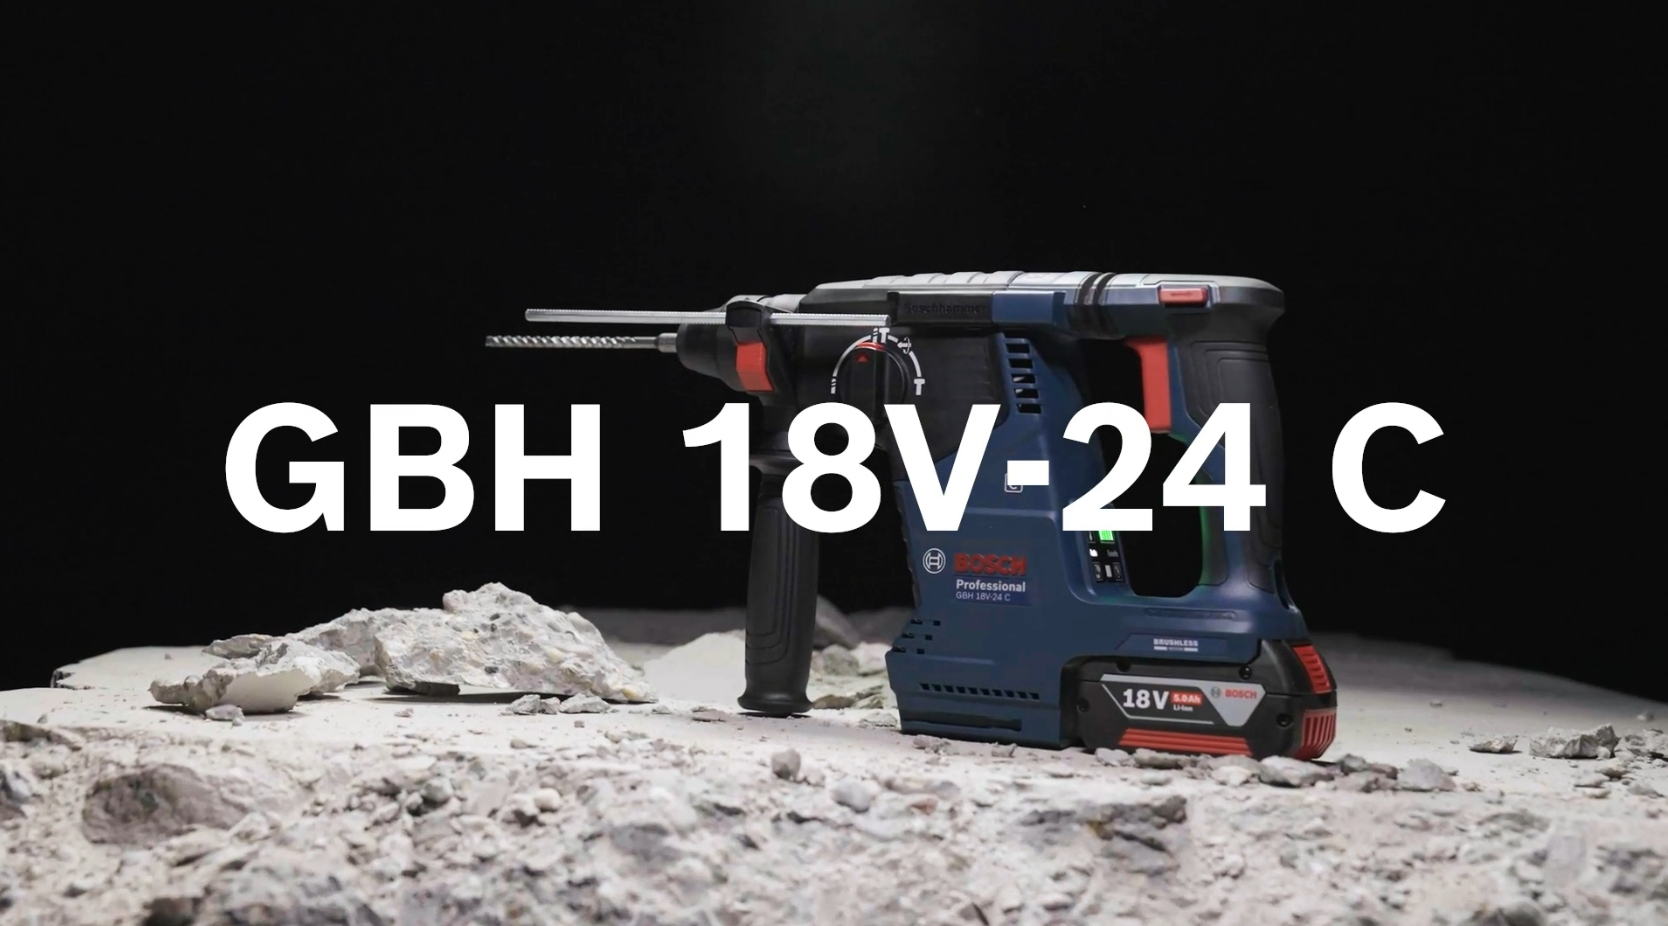 Bosch GBH 18V-24 kaufen in L-BOXX C Professional